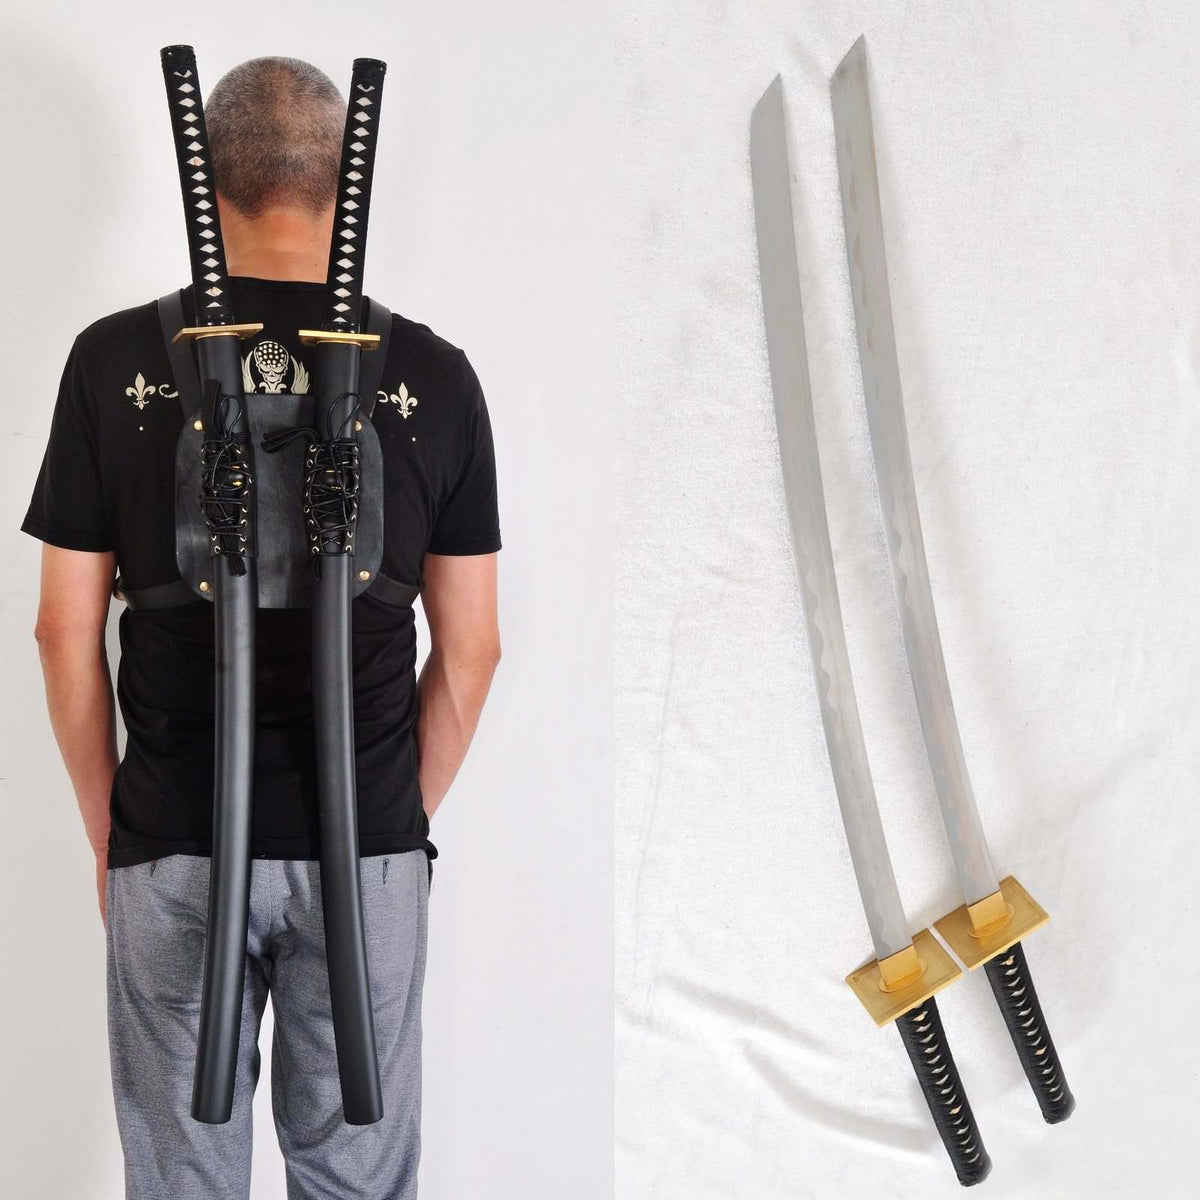 Hand Forged Folded Steel Blade Functional Deadpool Samurai Katana Sword Set w/ Backstrap